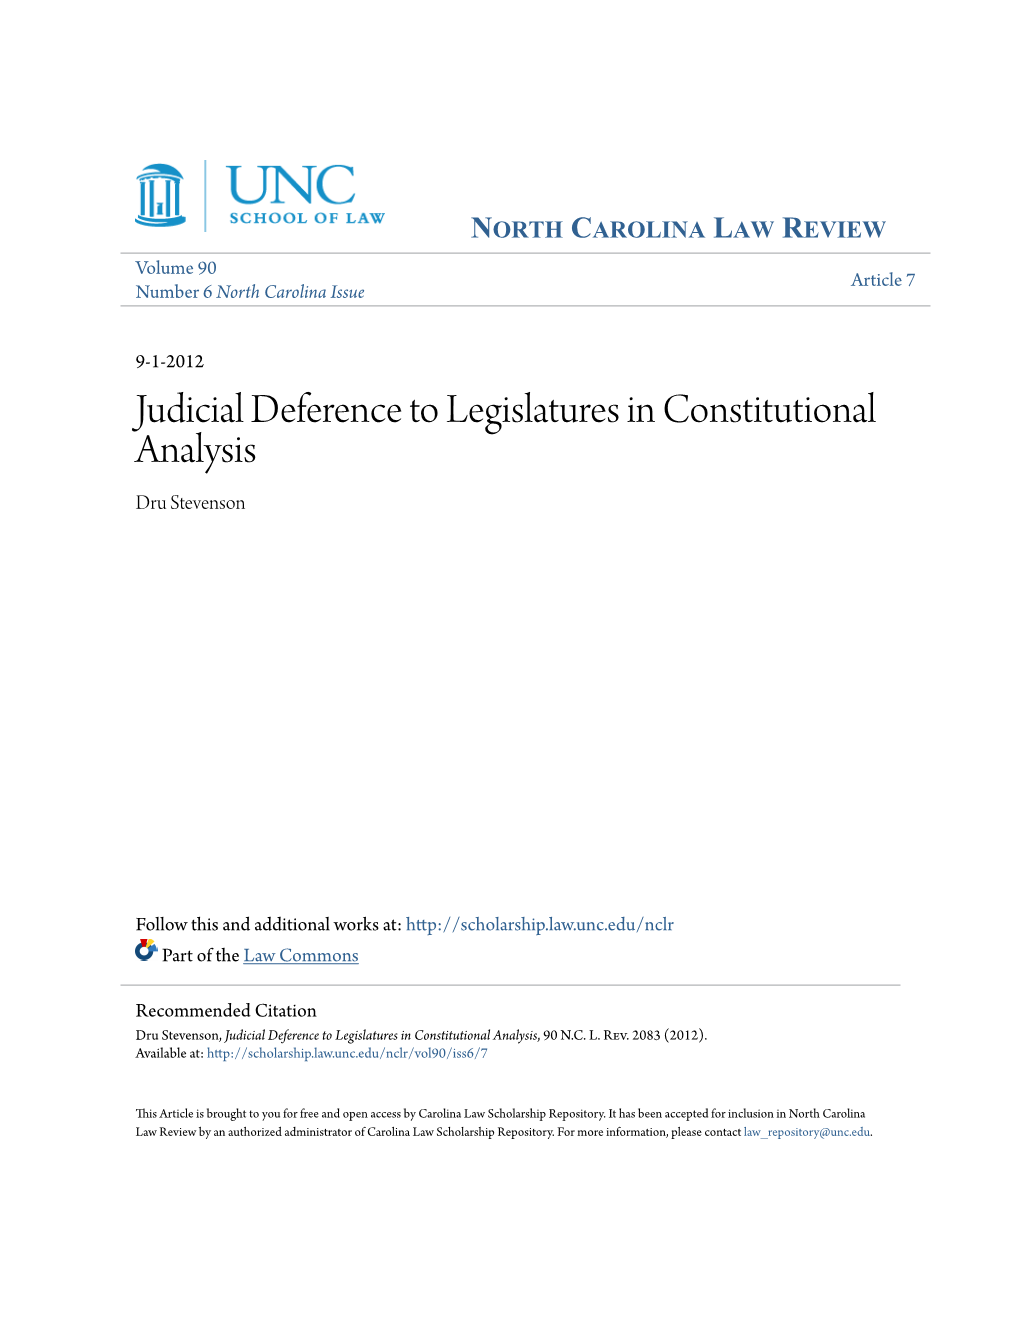 Judicial Deference to Legislatures in Constitutional Analysis Dru Stevenson